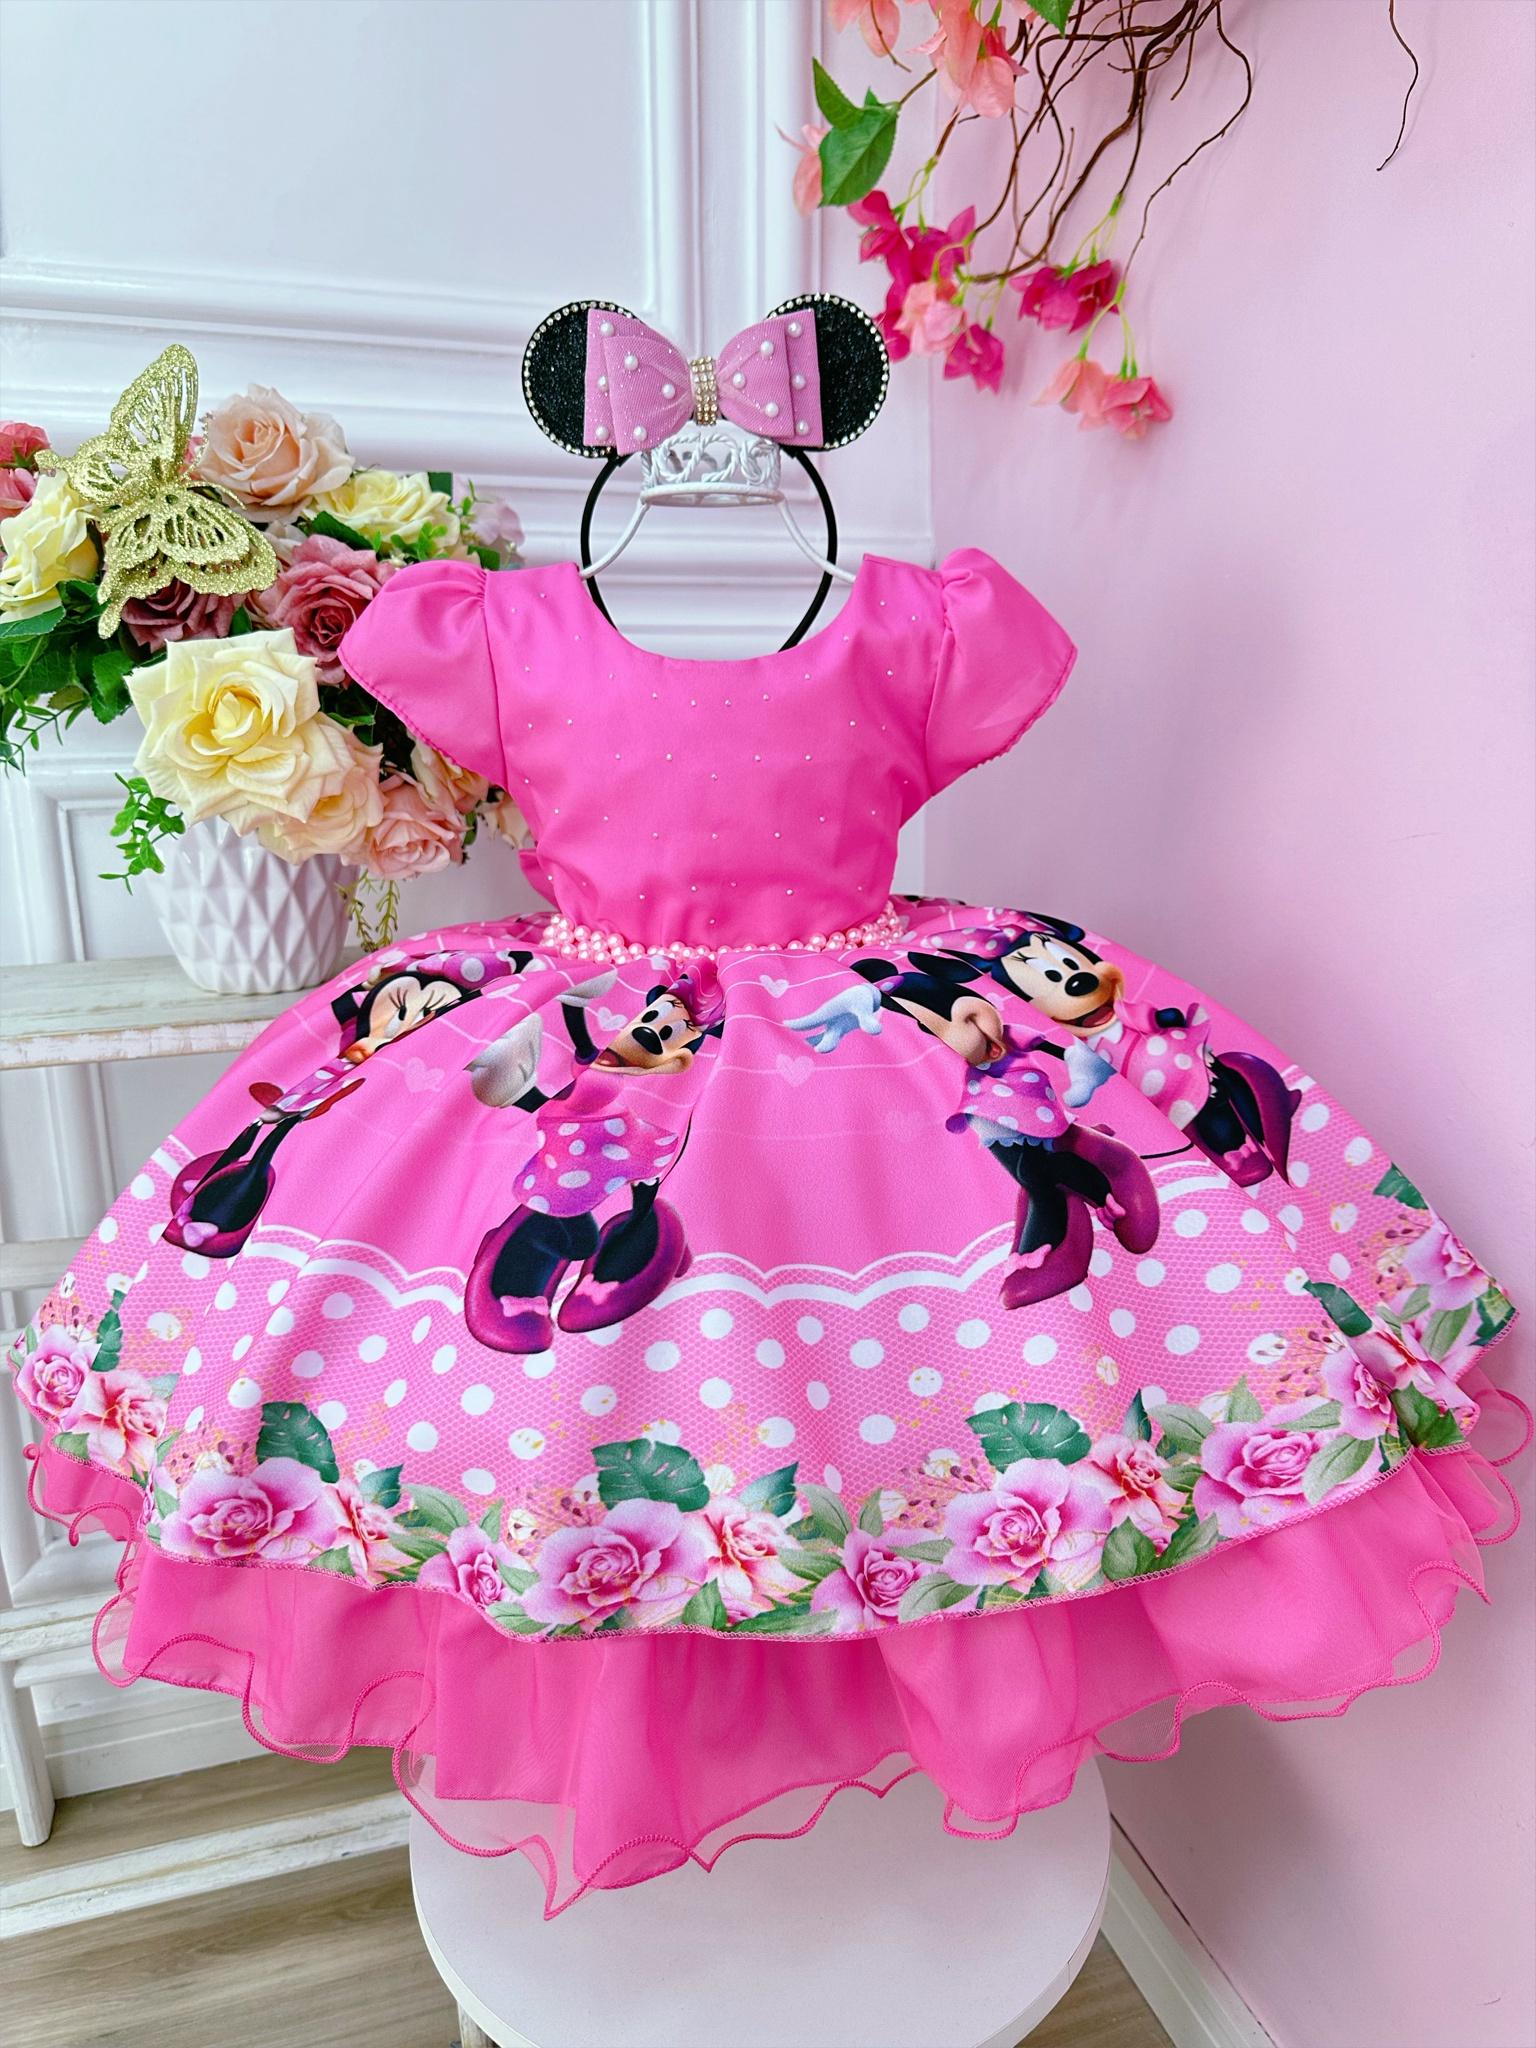 Vestido Infantil Minnie Rosa Chiclete Cinto de Pérolas Luxo